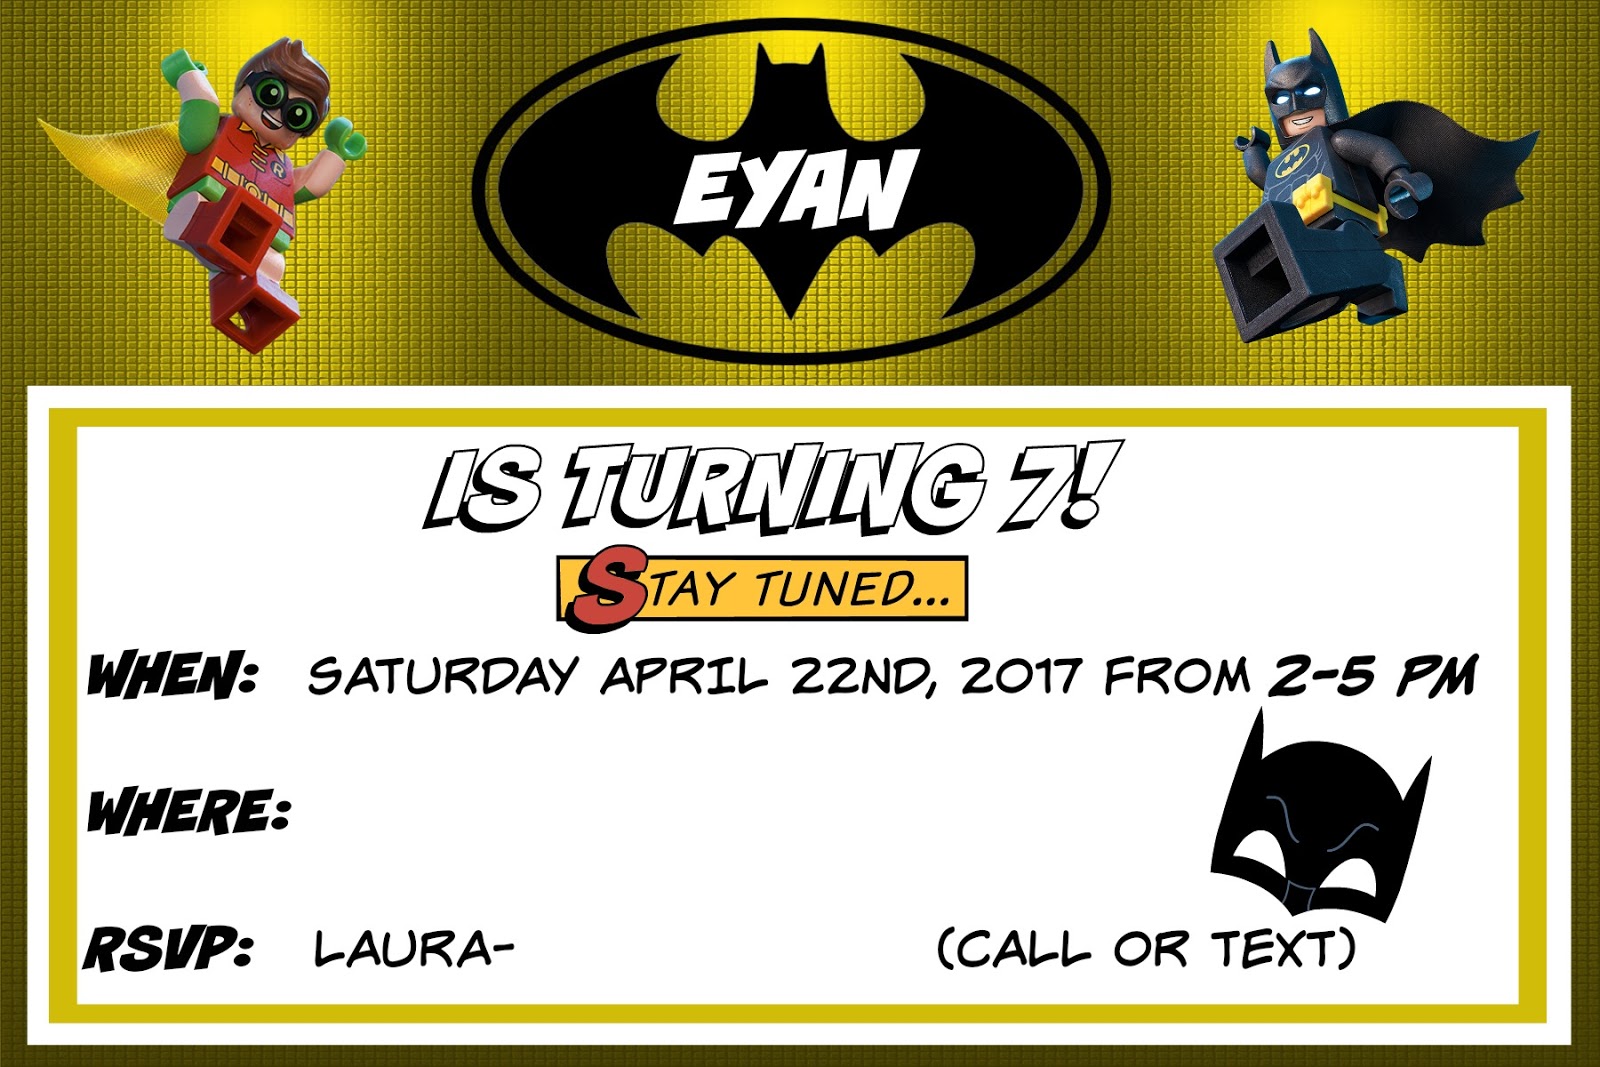 Lego Batman Party Ideas and Decorations - We Got The Funk